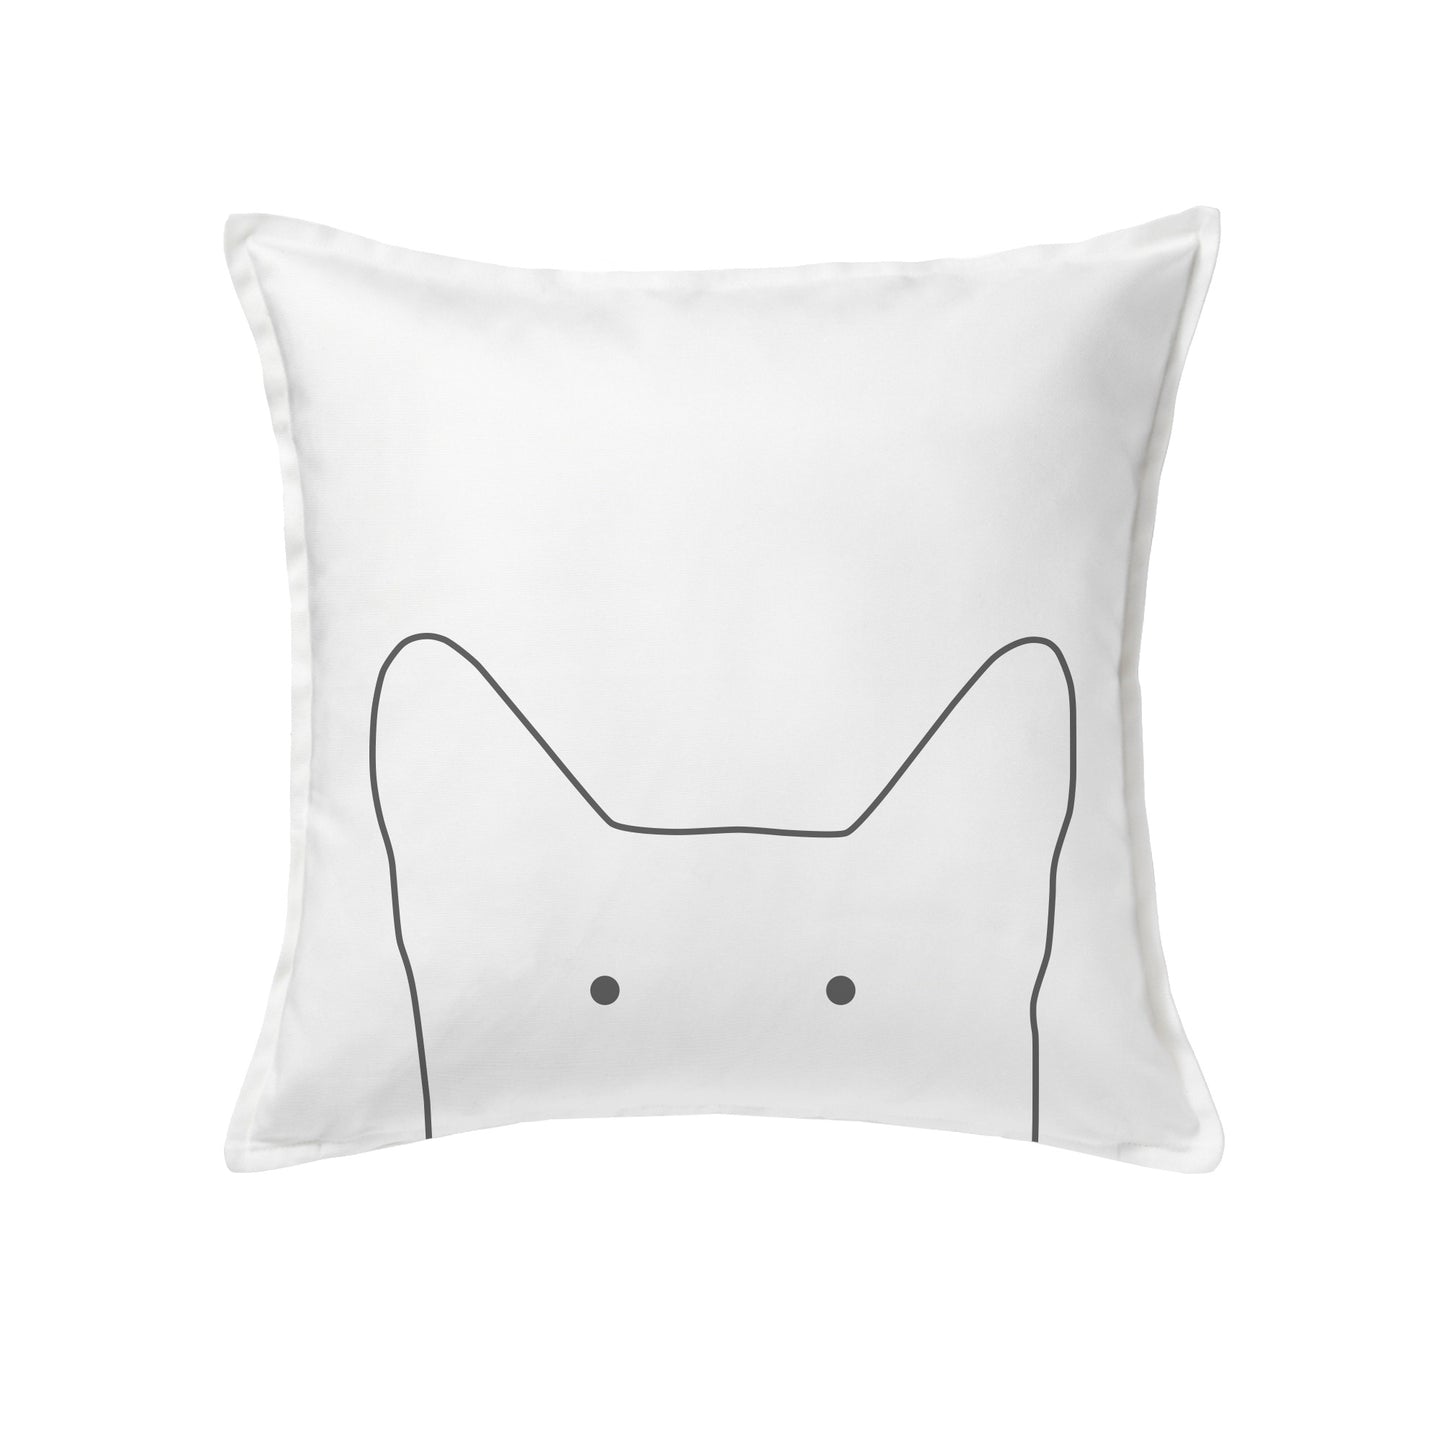 Cat cushion or cover 50x50cm (20x20